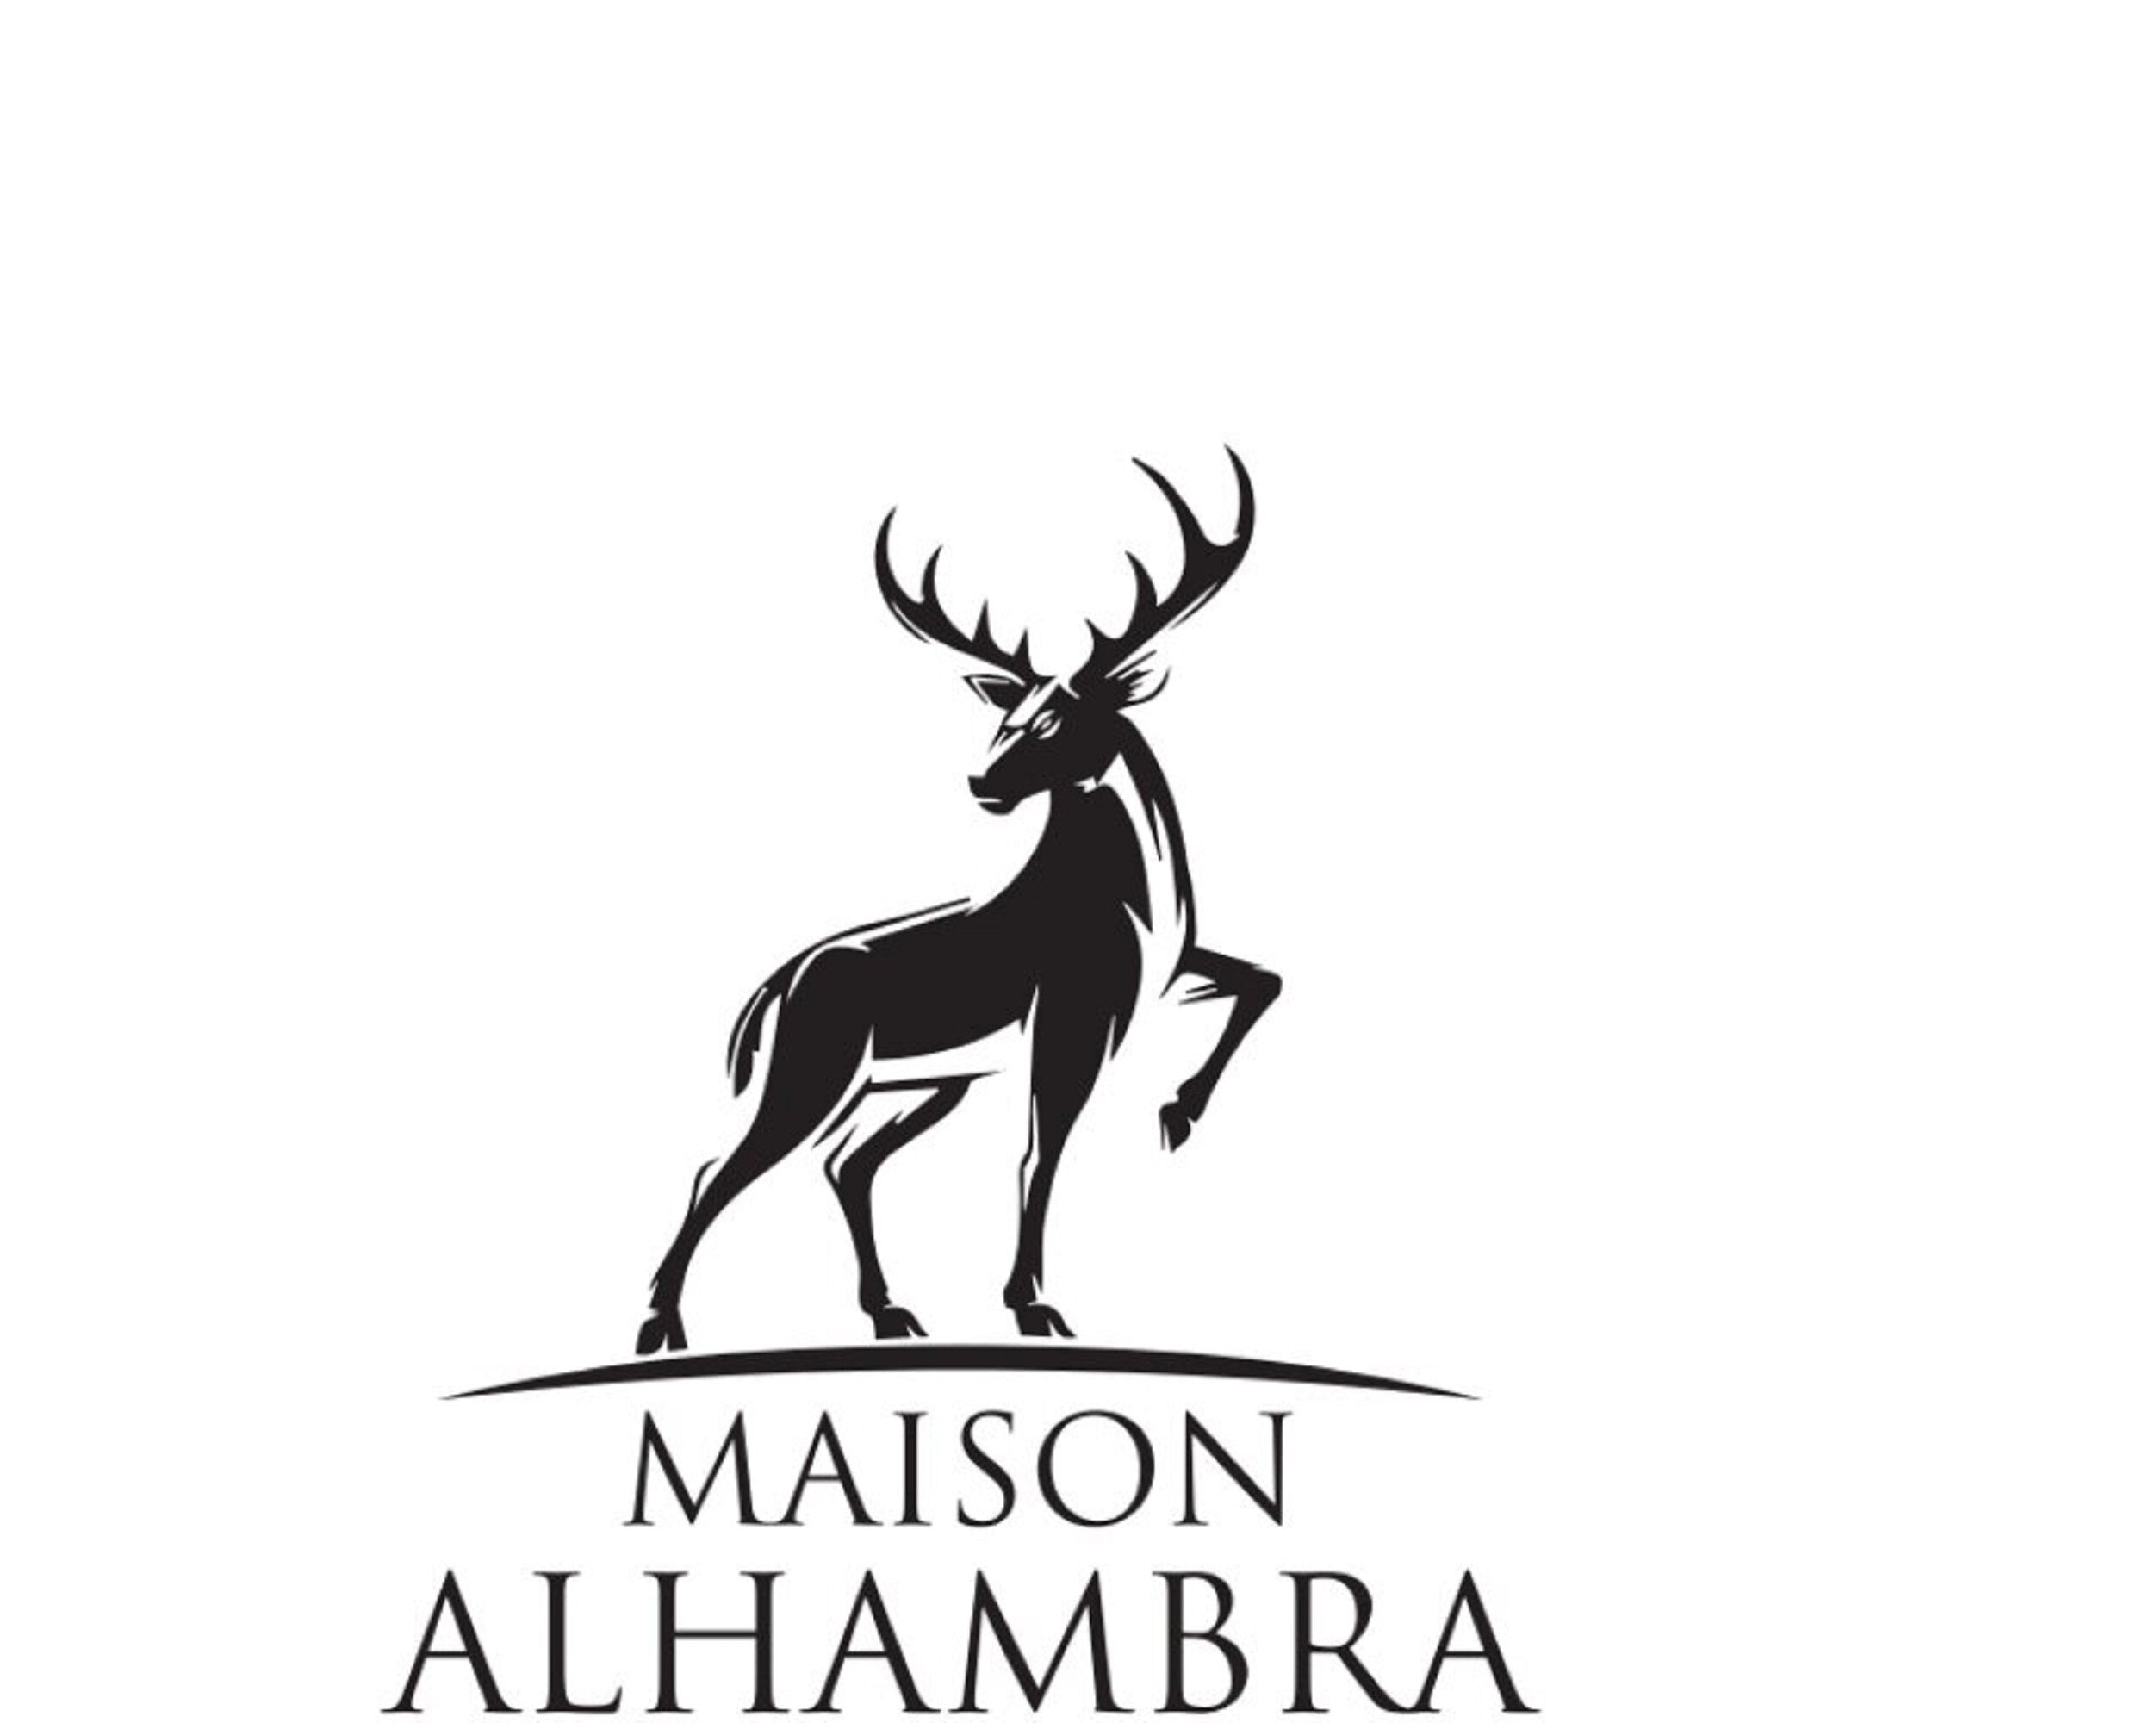 Maison Alhambra Amber & Leather EDP Perfume 100 ml